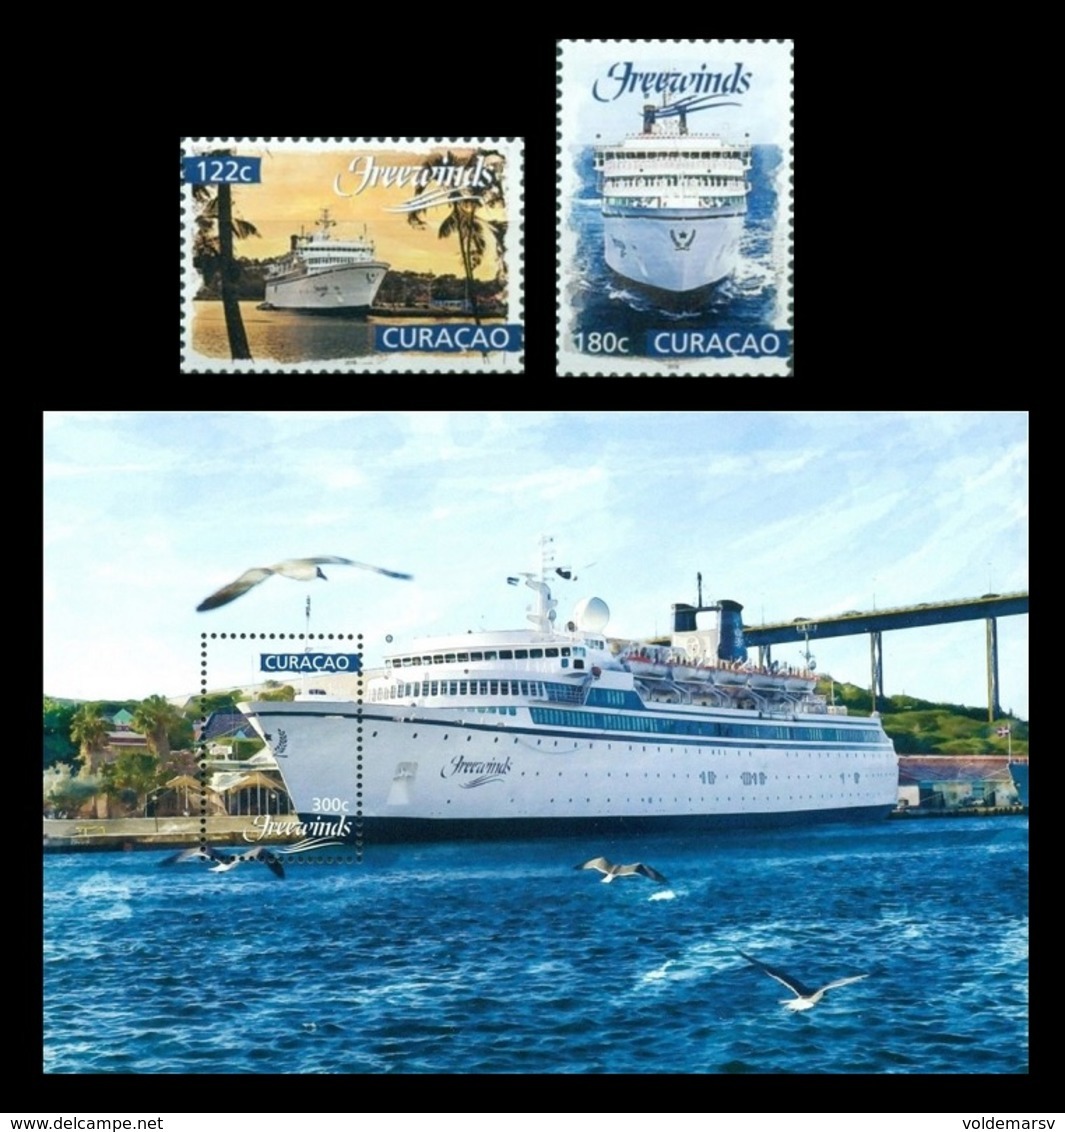 Curacao 2018 Mih. 458/59 + 460 (Bl.27) Ship Freewinds In Curacao Harbour MNH ** - Curacao, Netherlands Antilles, Aruba